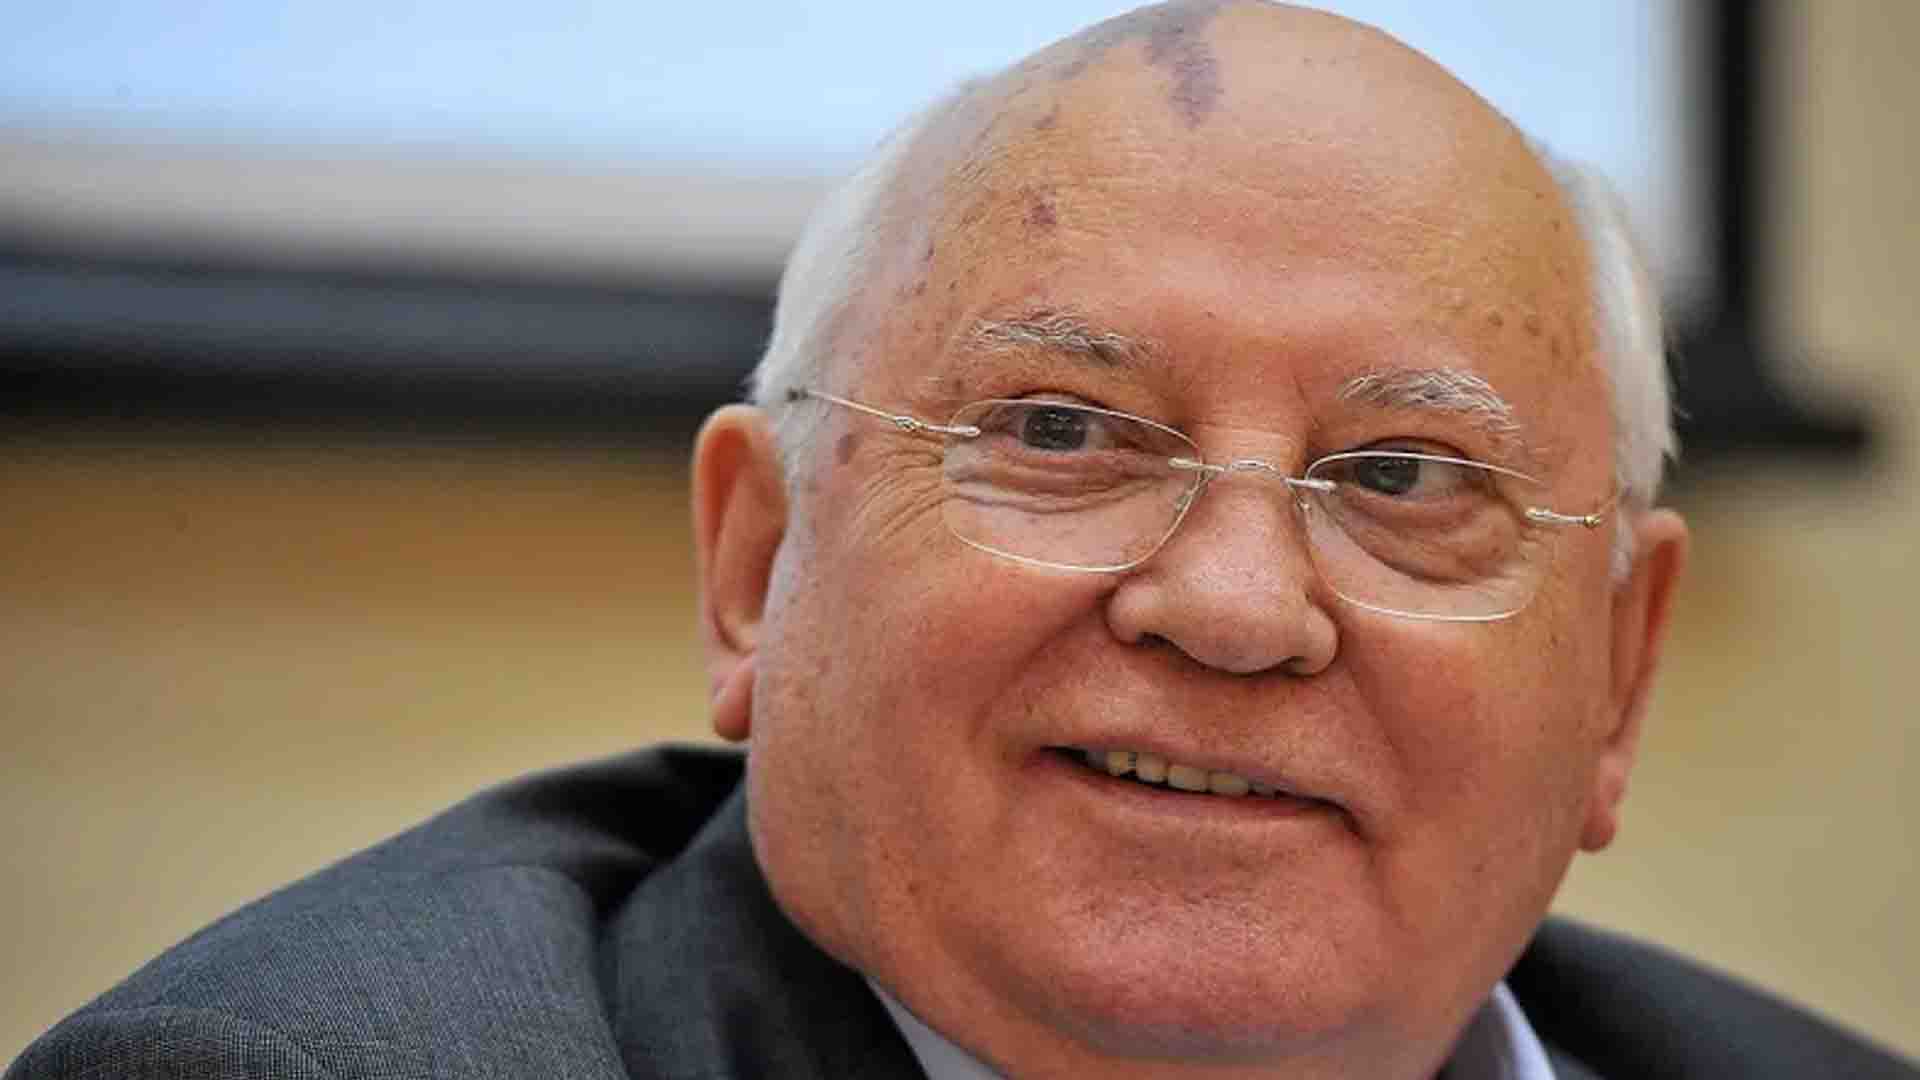 Morre Mikhail Gorbachev, último presidente da União Soviética